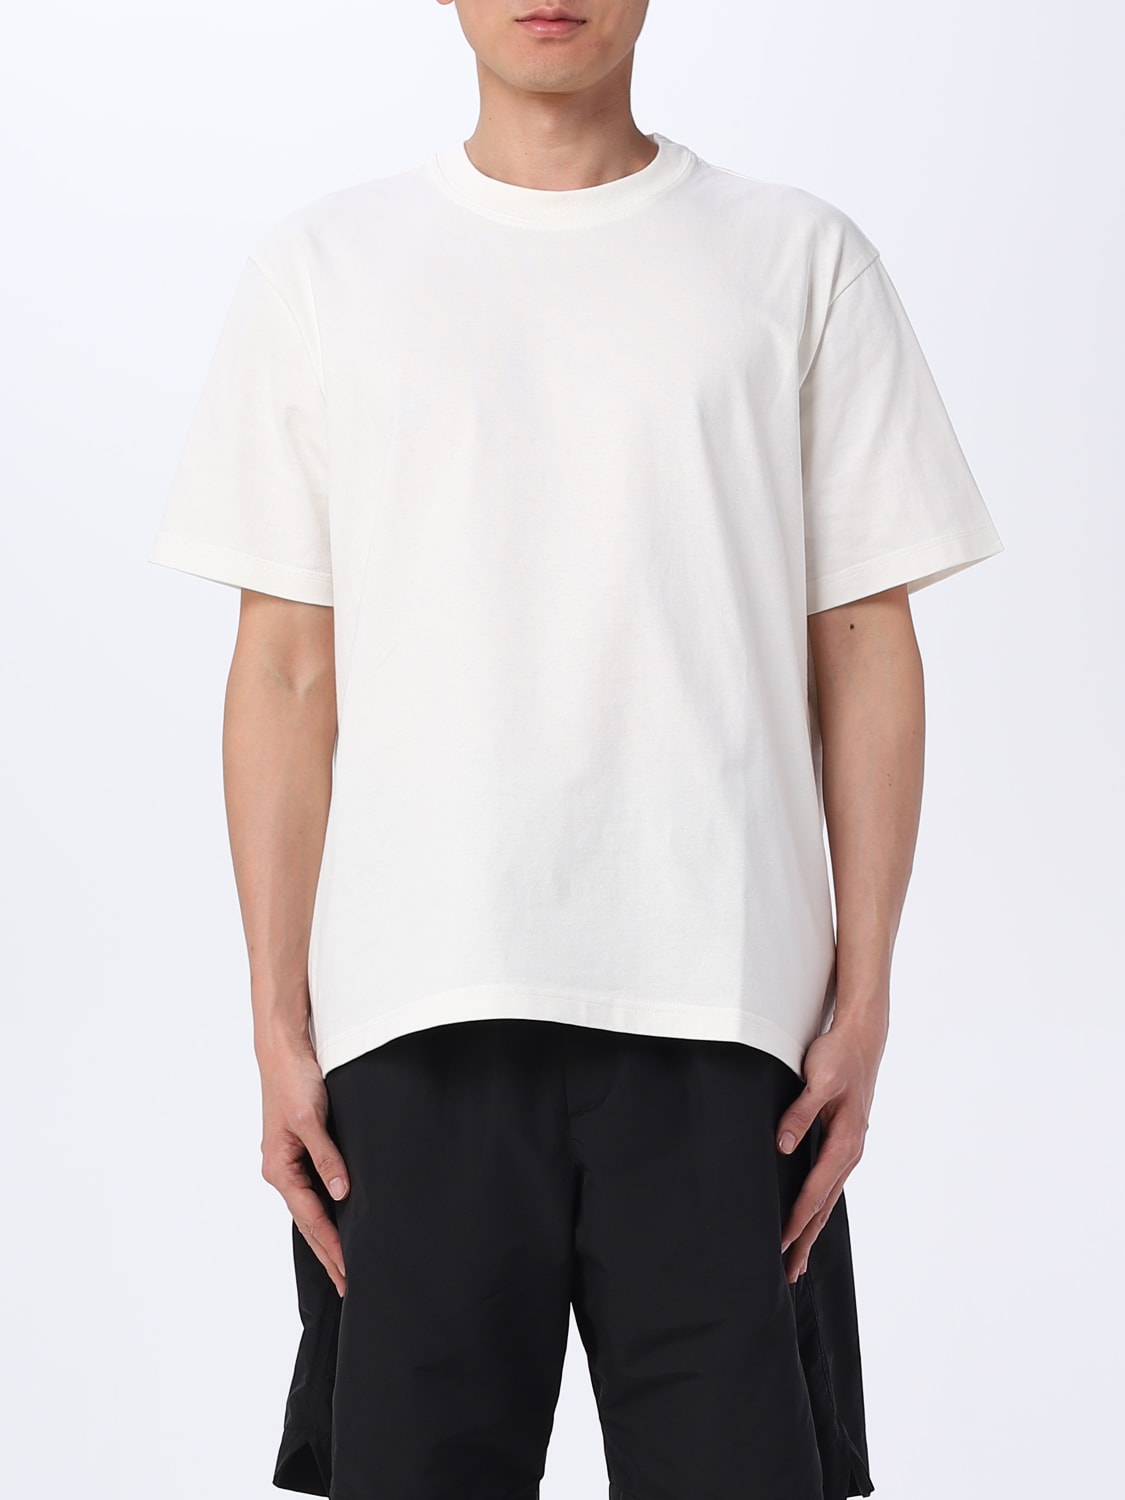 Bottega Veneta Outlet: basic cotton T-shirt - White | Bottega